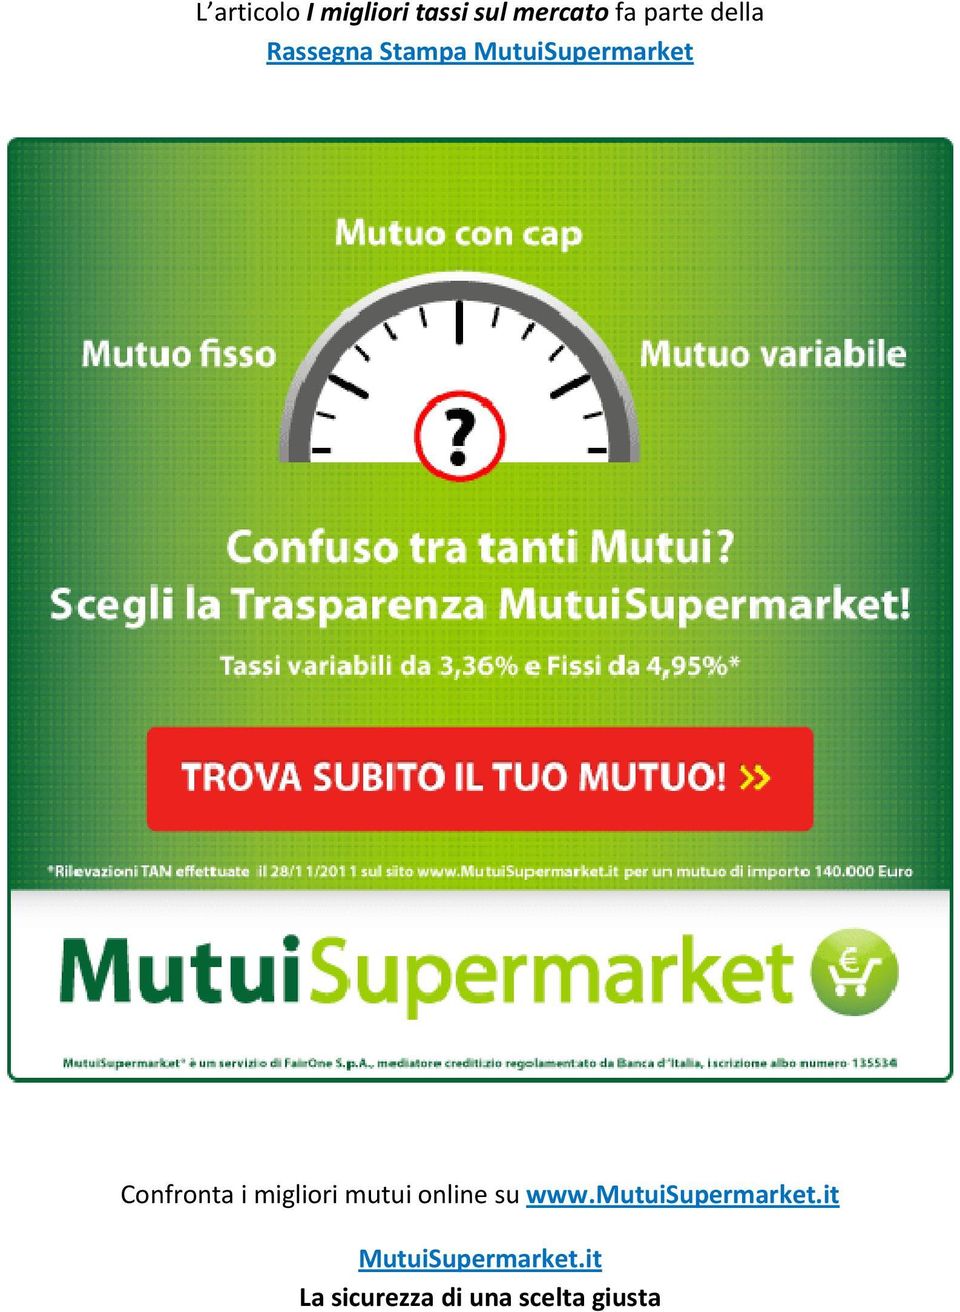 migliori mutui online su www.mutuisupermarket.